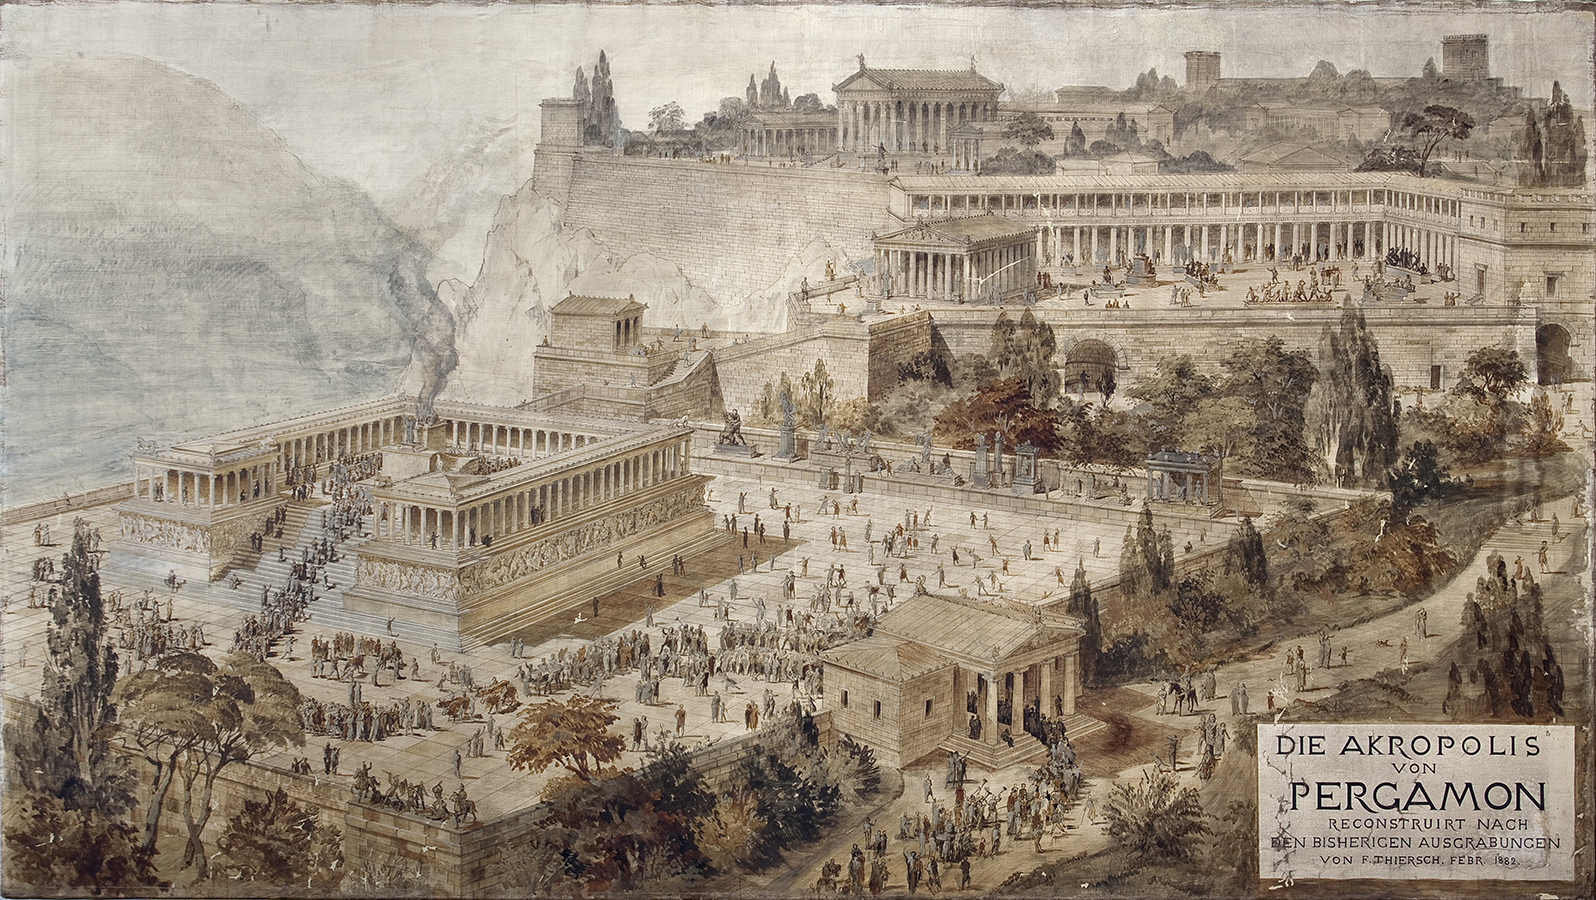 Pergamon_Acropolis_Reconstructed_View